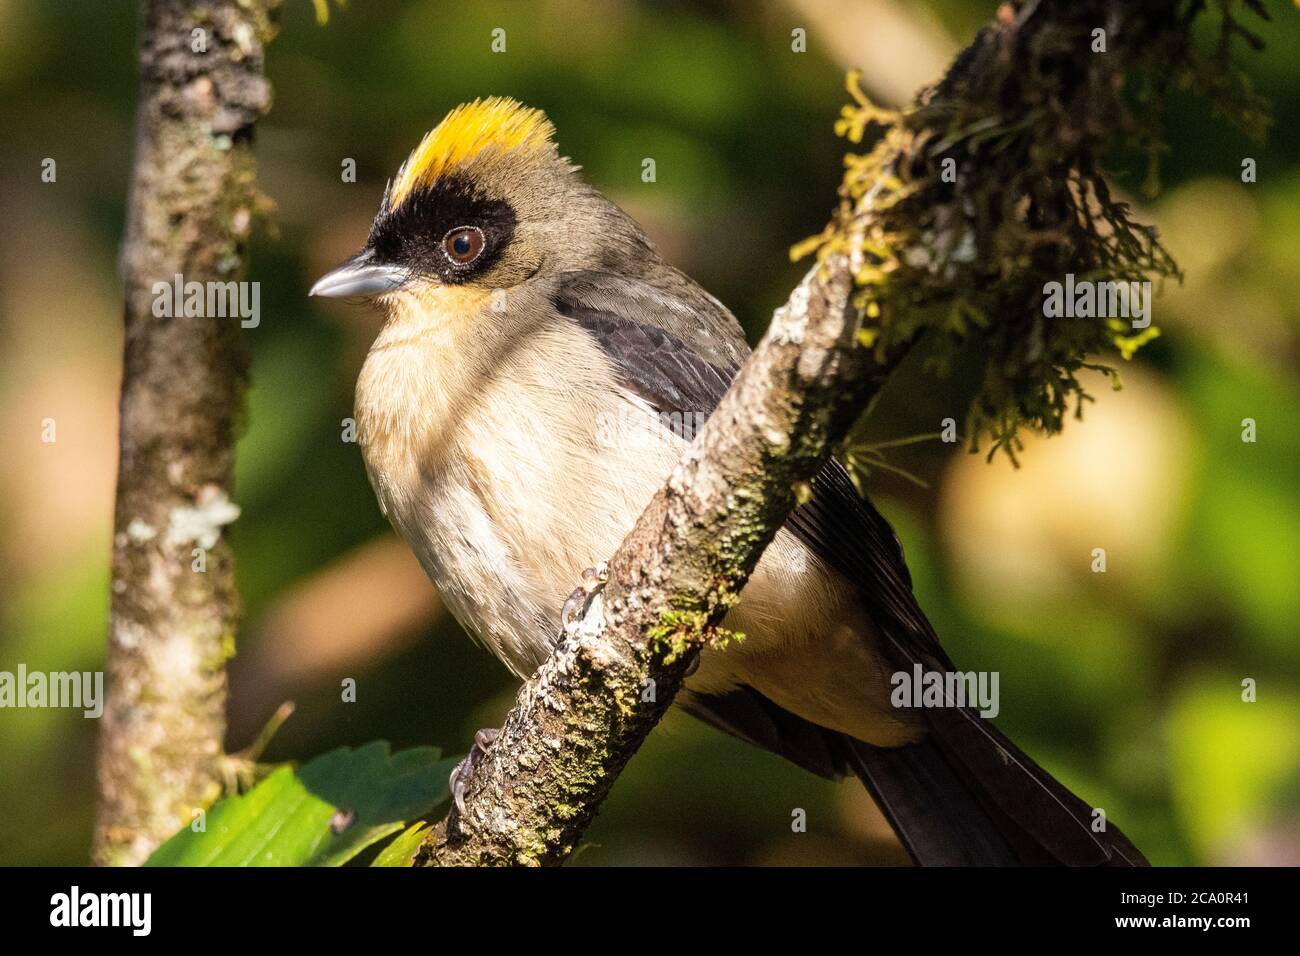 Beautiful brown, yellow and black bird in Atlantic Rainforest vegetation, Serrinha do Alambari Ecological Reserve, Rio de Janeiro, Brazil Stock Photo